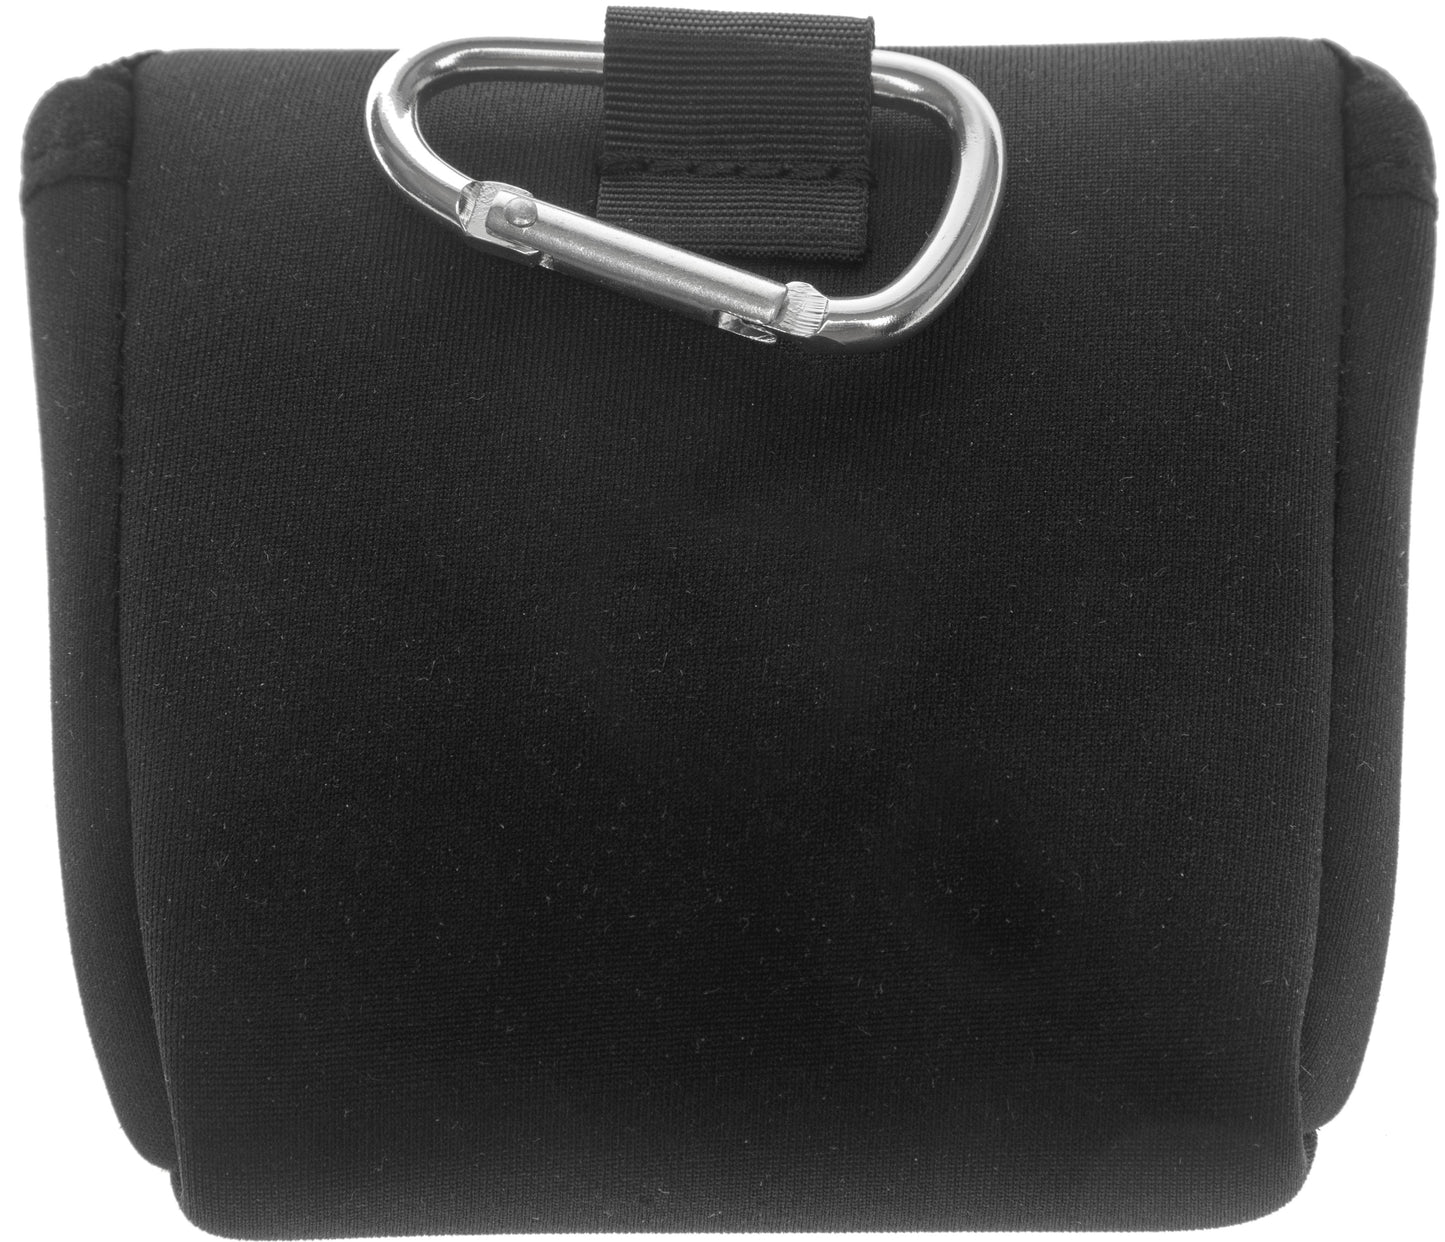 NEWLOOXS Display Bag Bosch Black